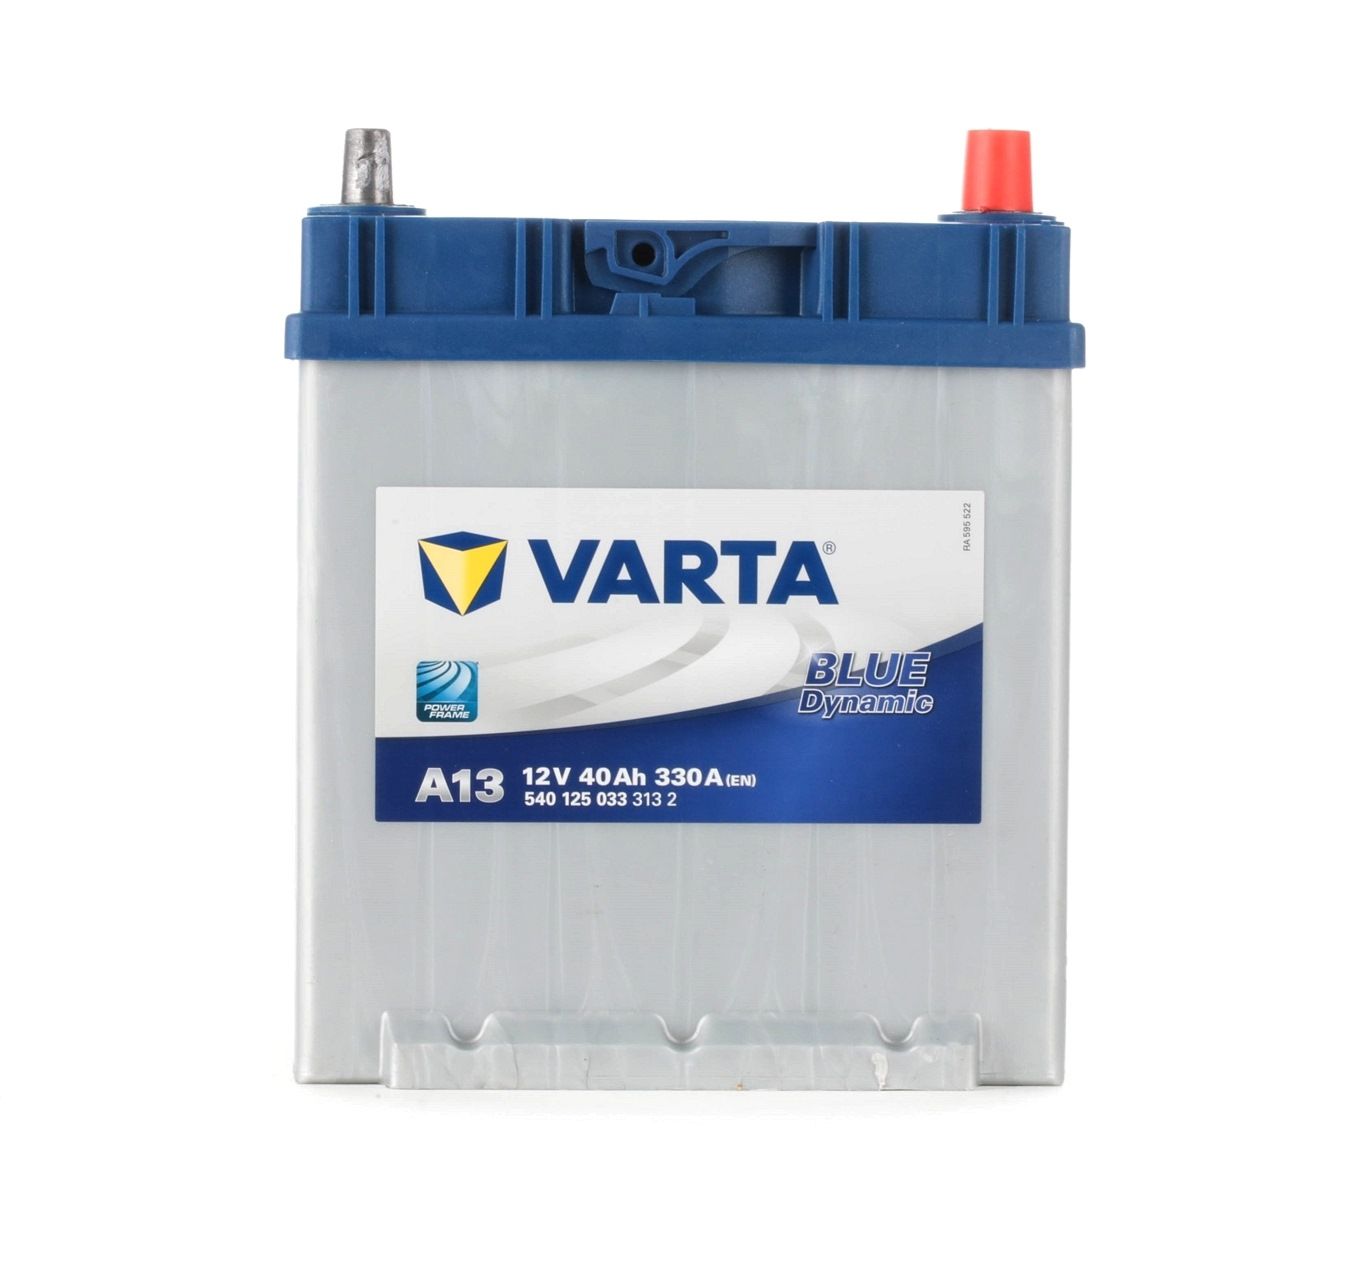 A13 VARTA BLUE dynamic, A13 5401250333132 Batterie additionnelle commander